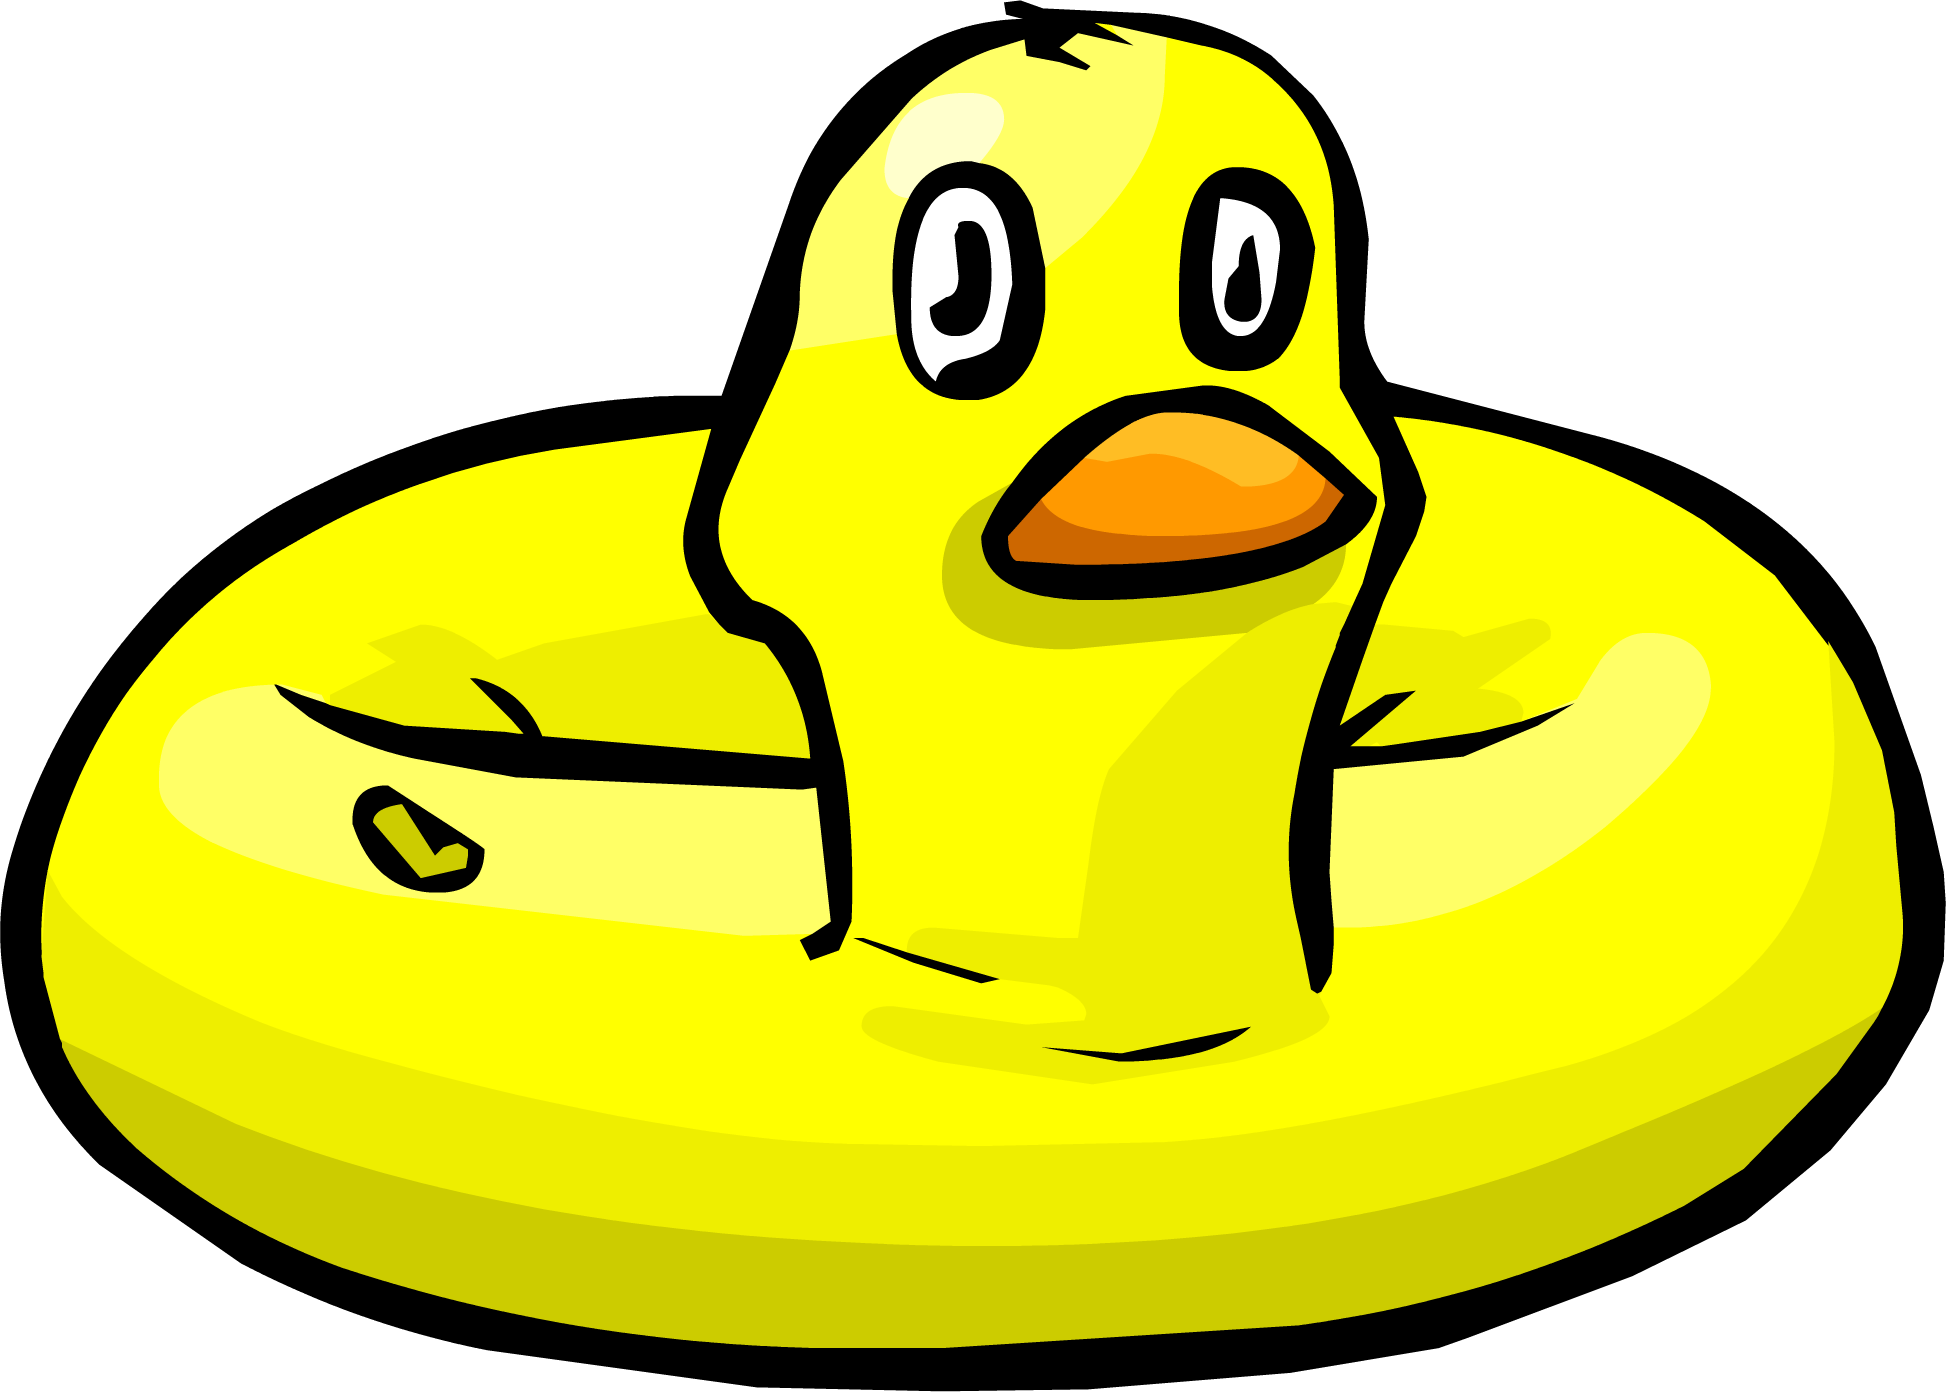 Inflatable duck club penguin. Ducks clipart duc